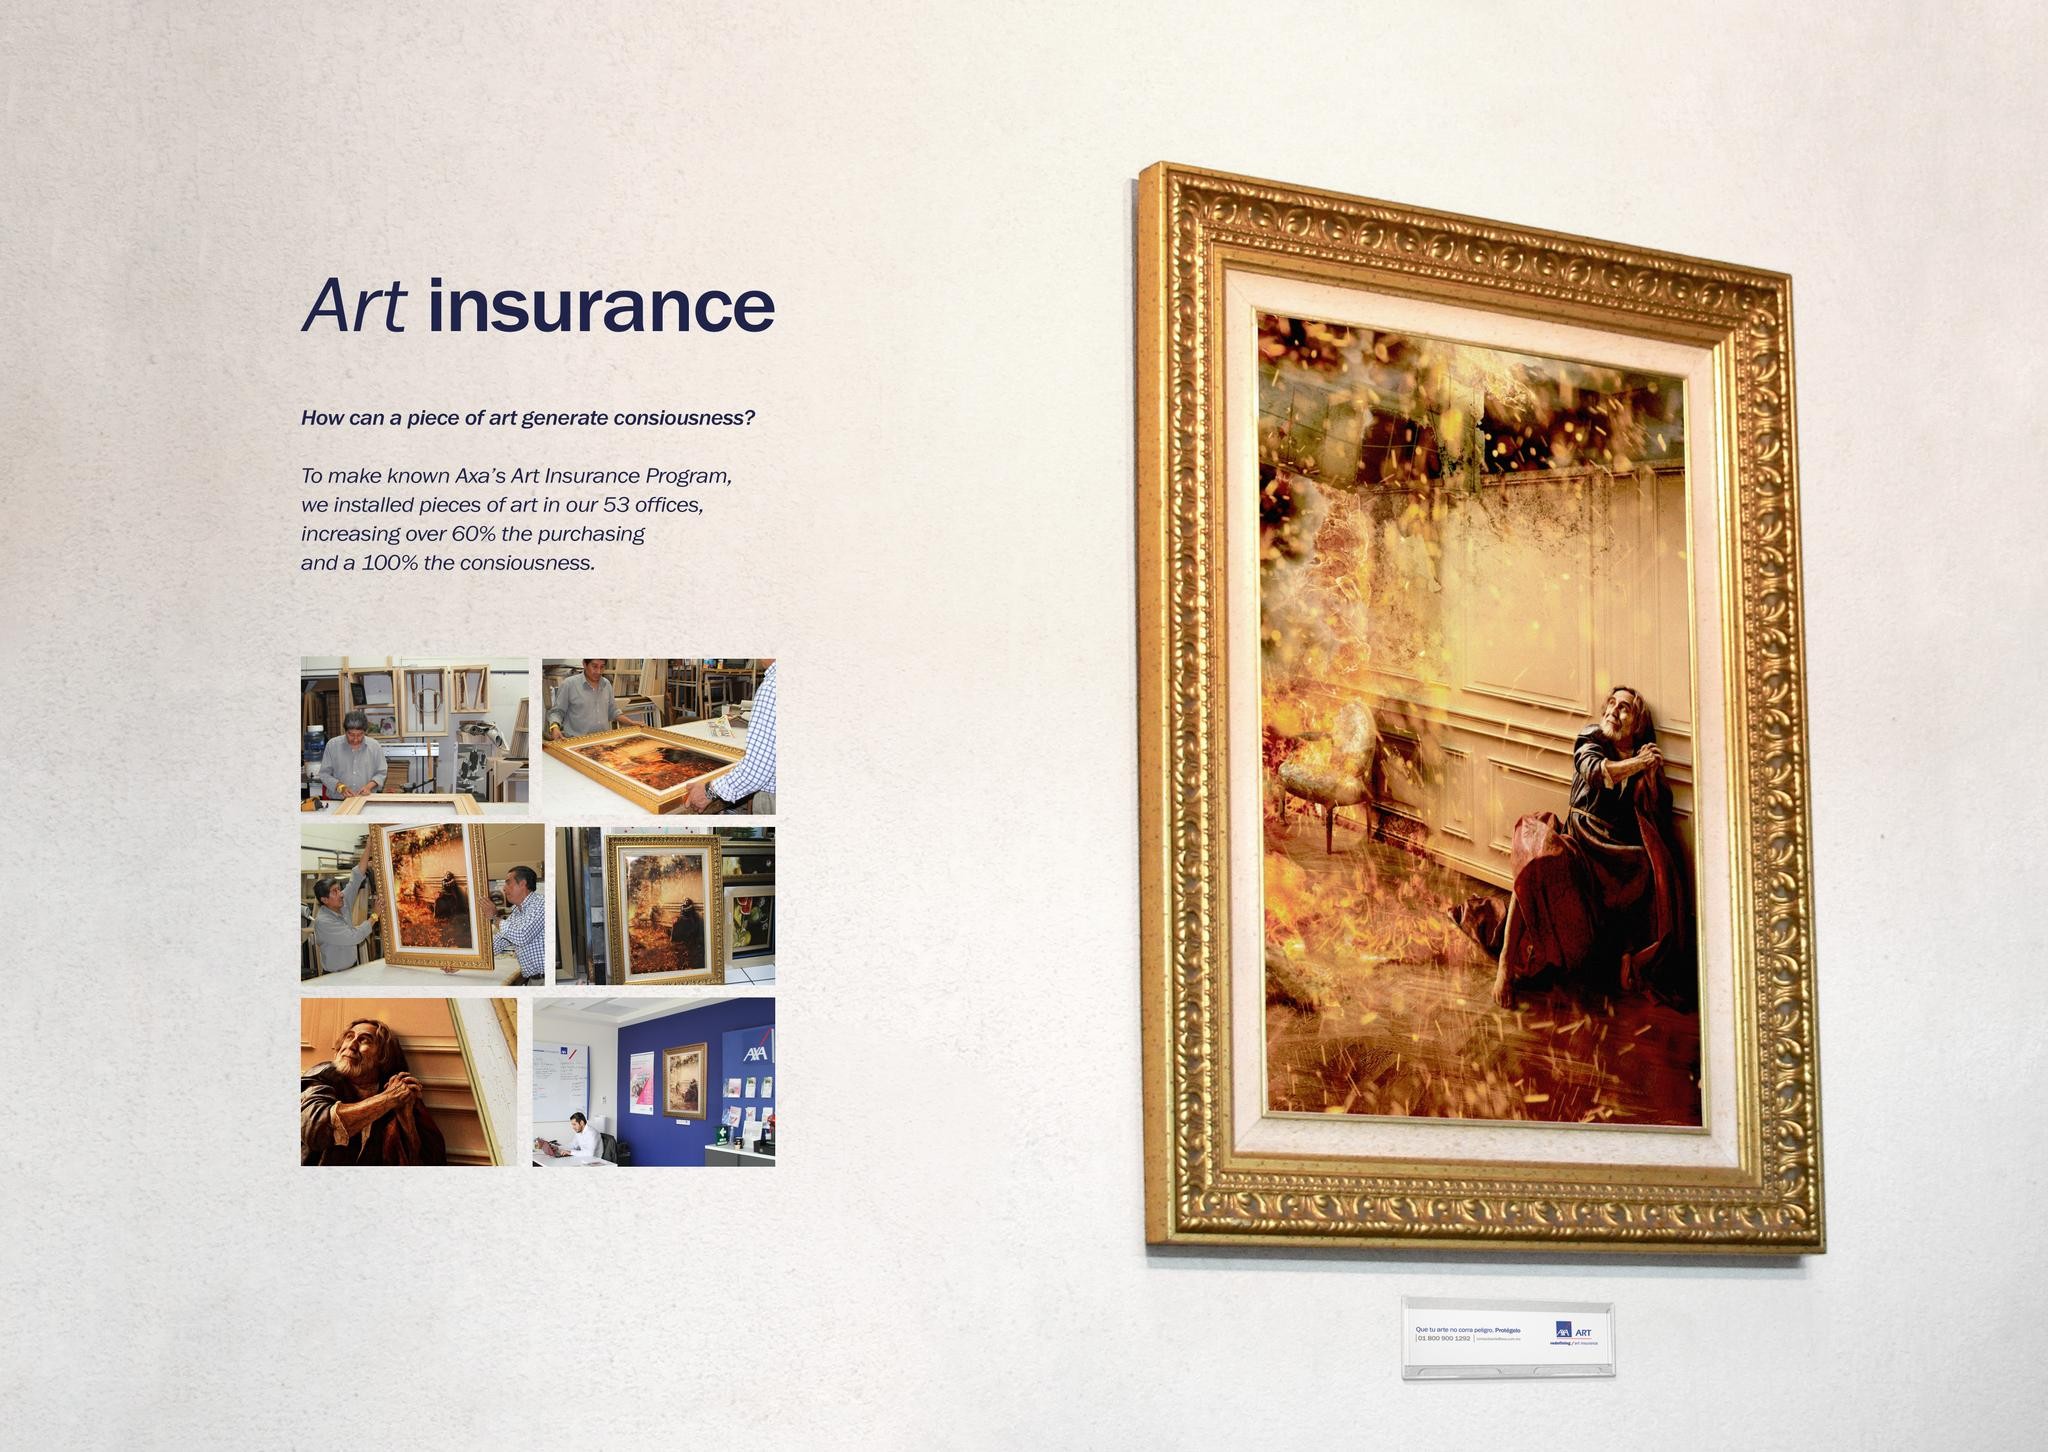 Art insurance